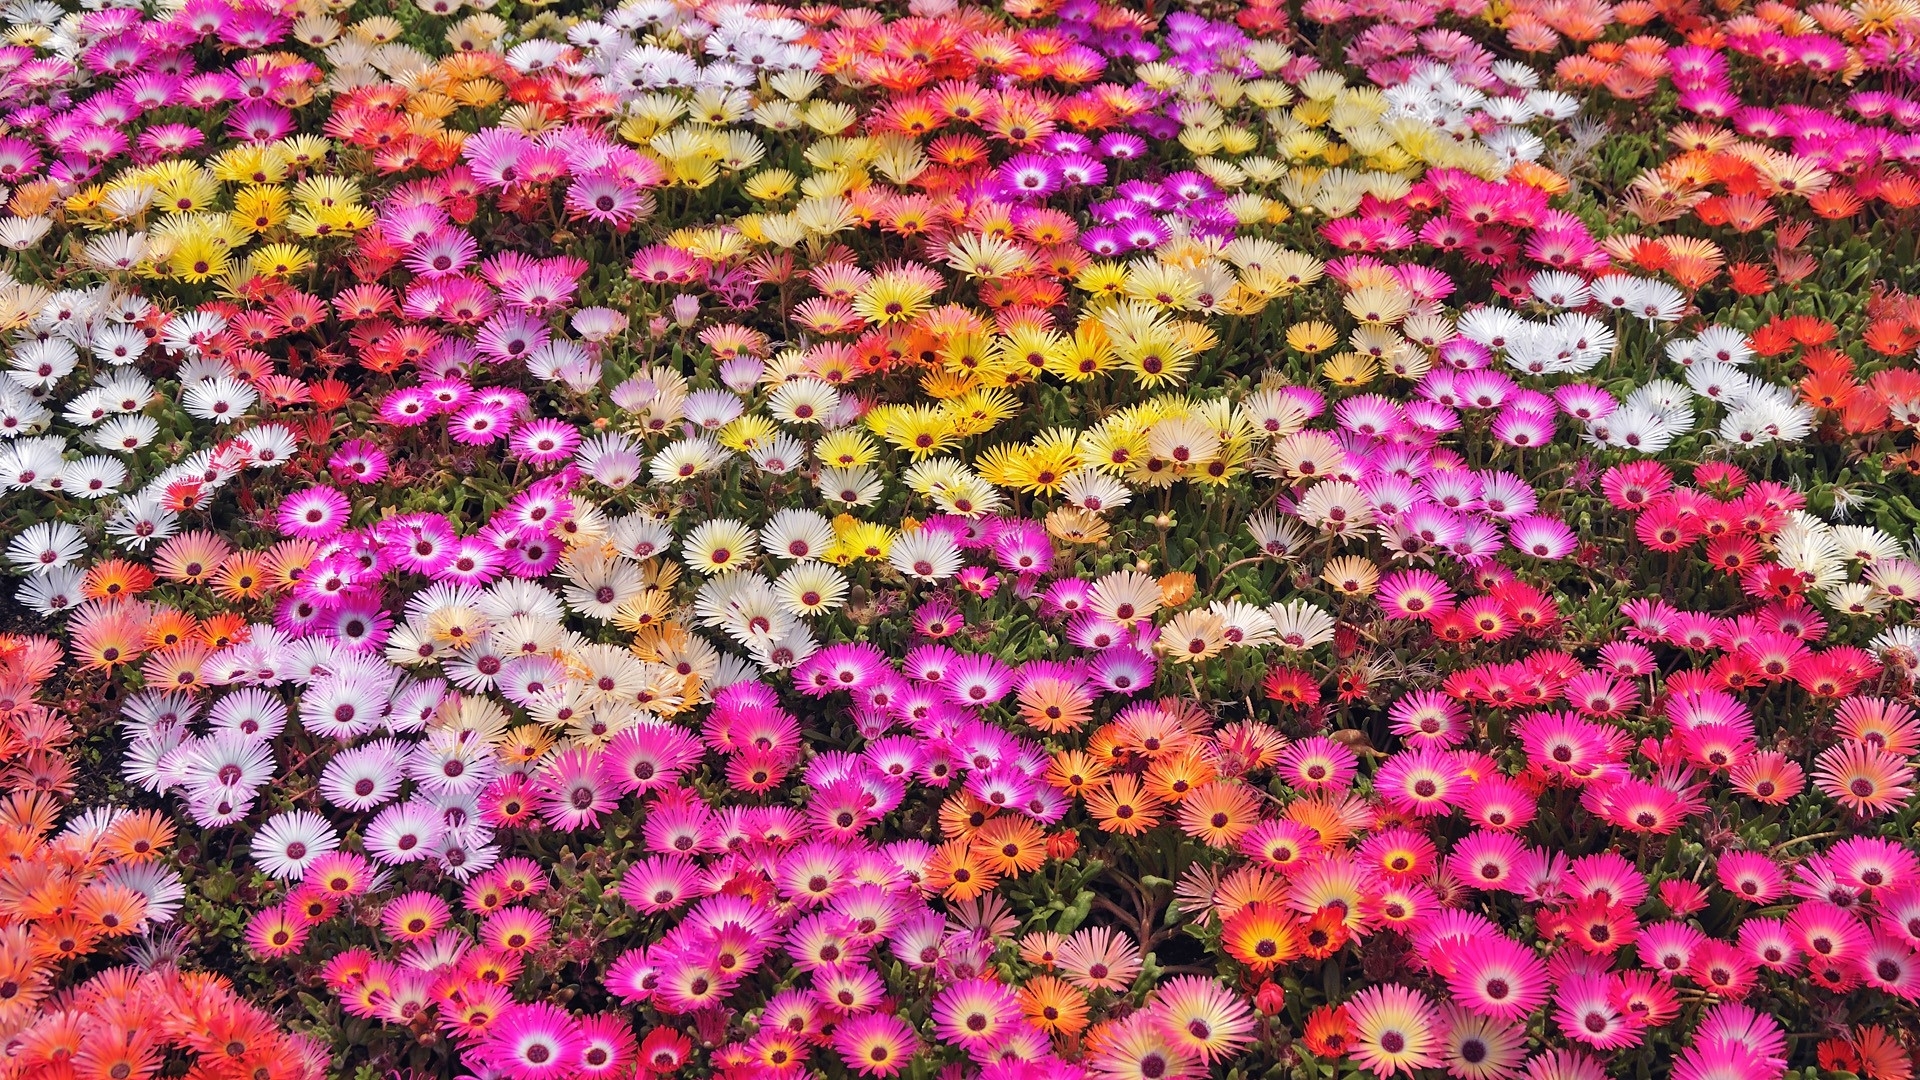 Nature flowers garden petals colors abstract plants